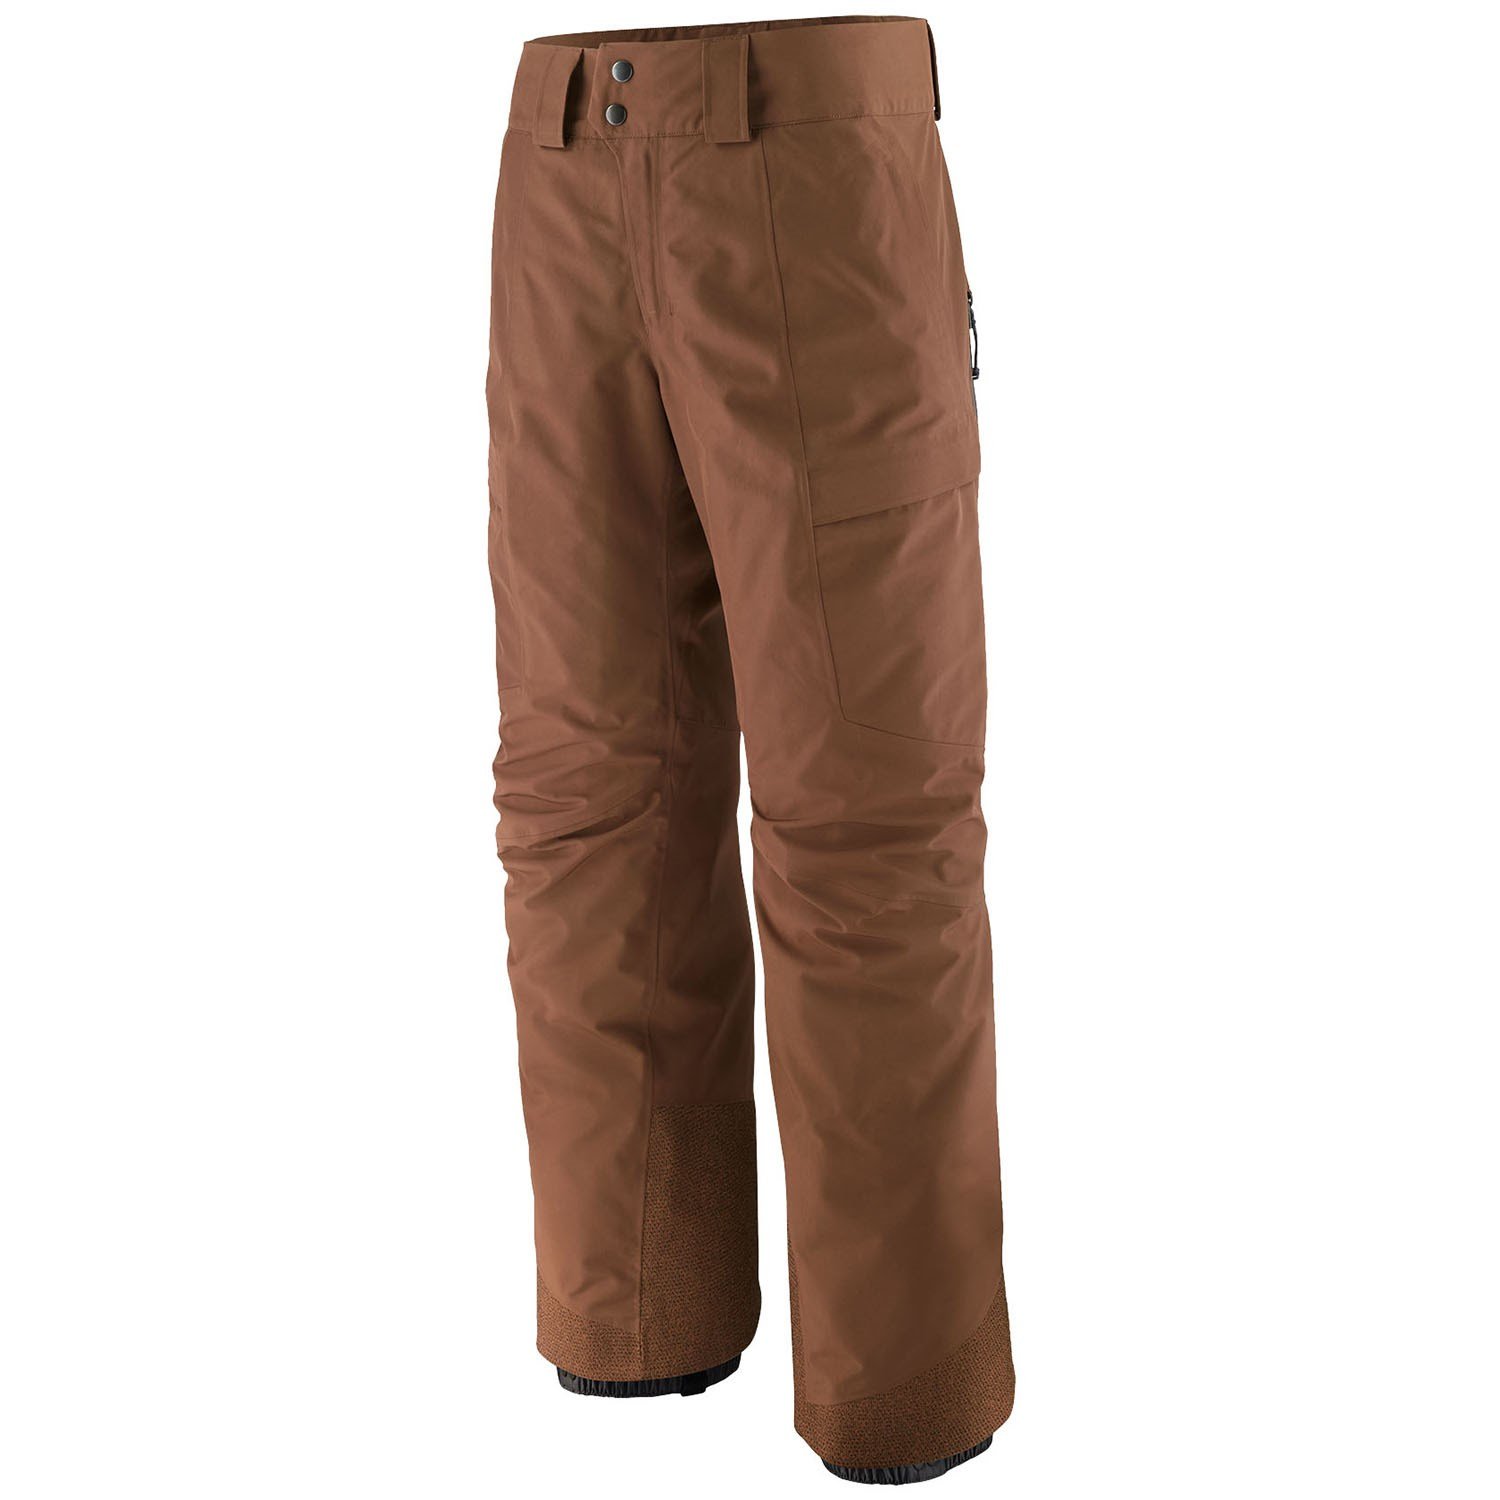 Брюки Patagonia Storm Shift, коричневый мужские брюки storm shift patagonia мус коричневый